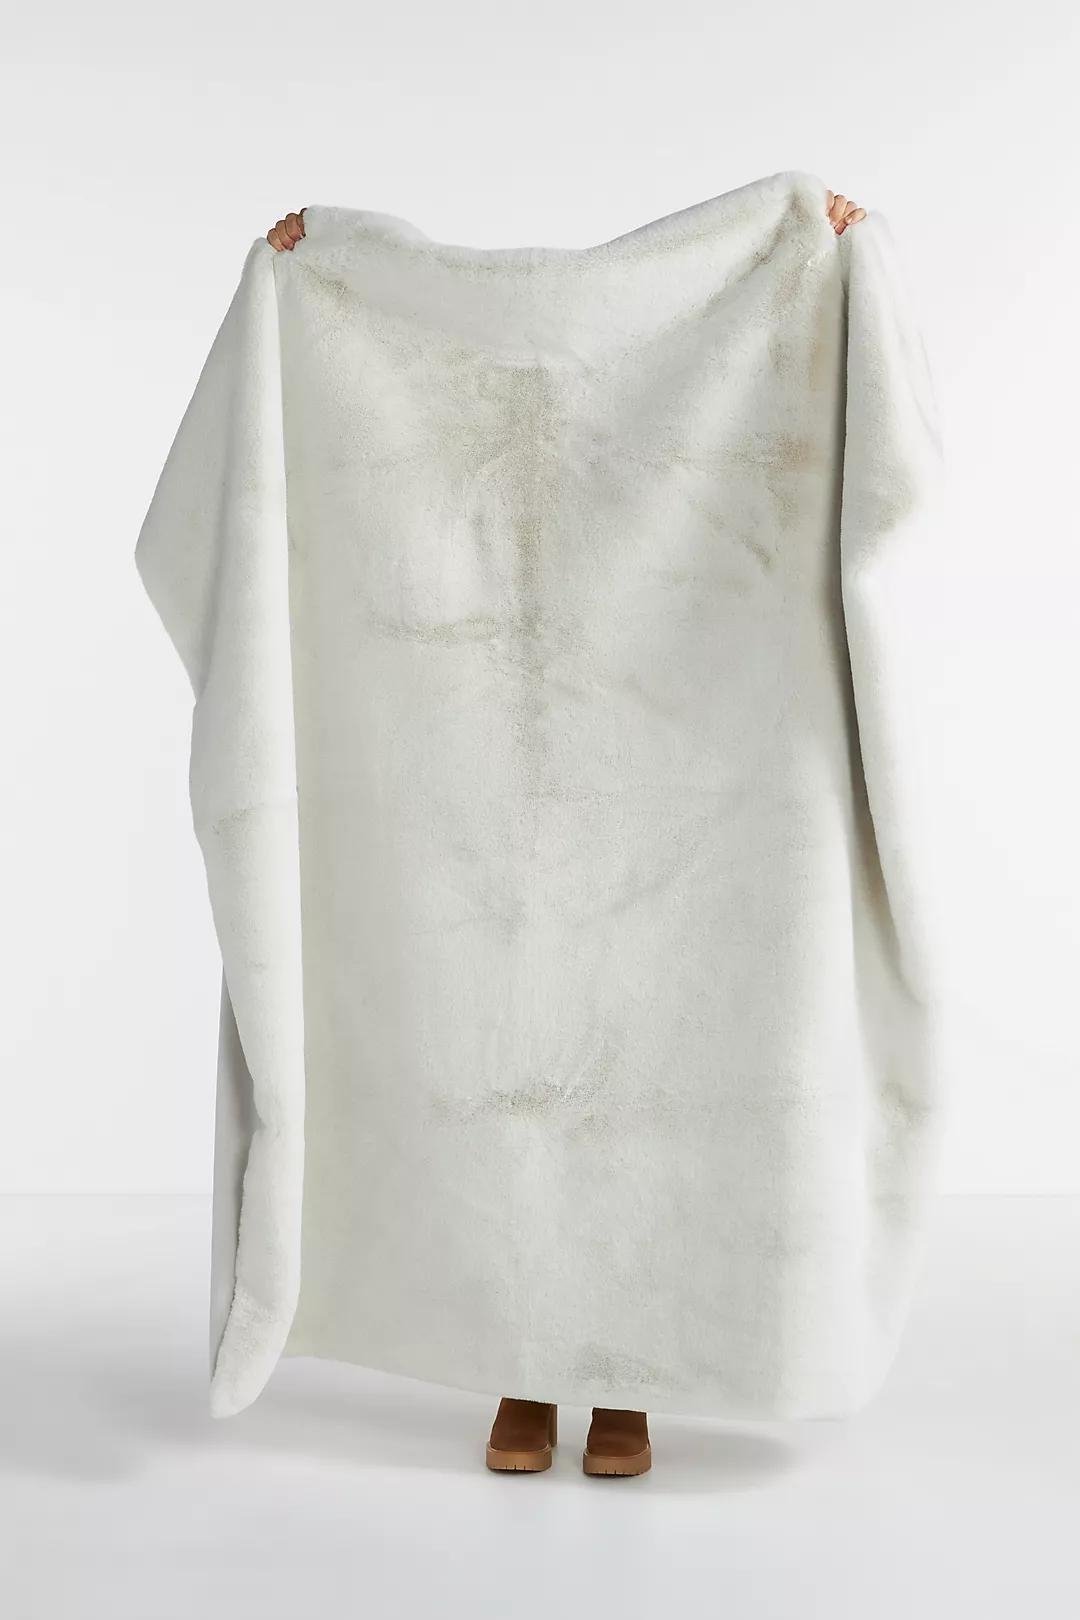 Sophie Faux Fur Throw Blanket By Anthropologie in Grey - Image 0